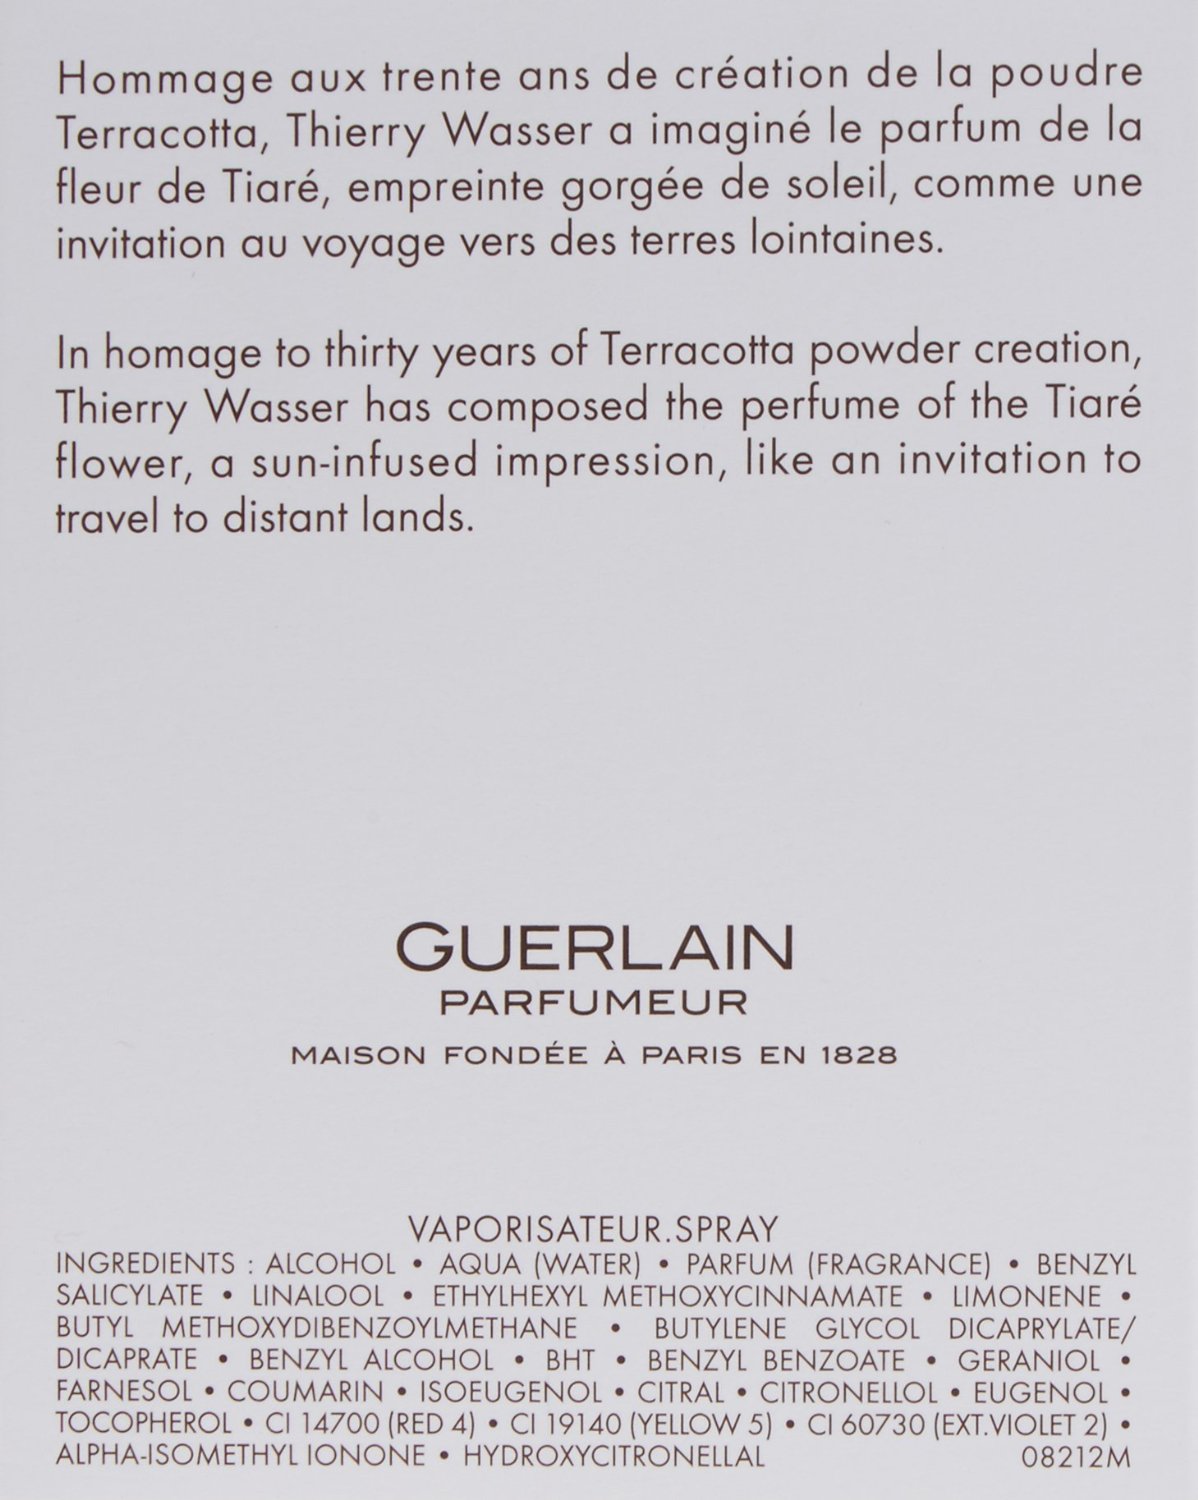 Guerlain 'Terracotta La Parfum' EDT 3.3oz/100ml New In Box LIMITIED EDITION